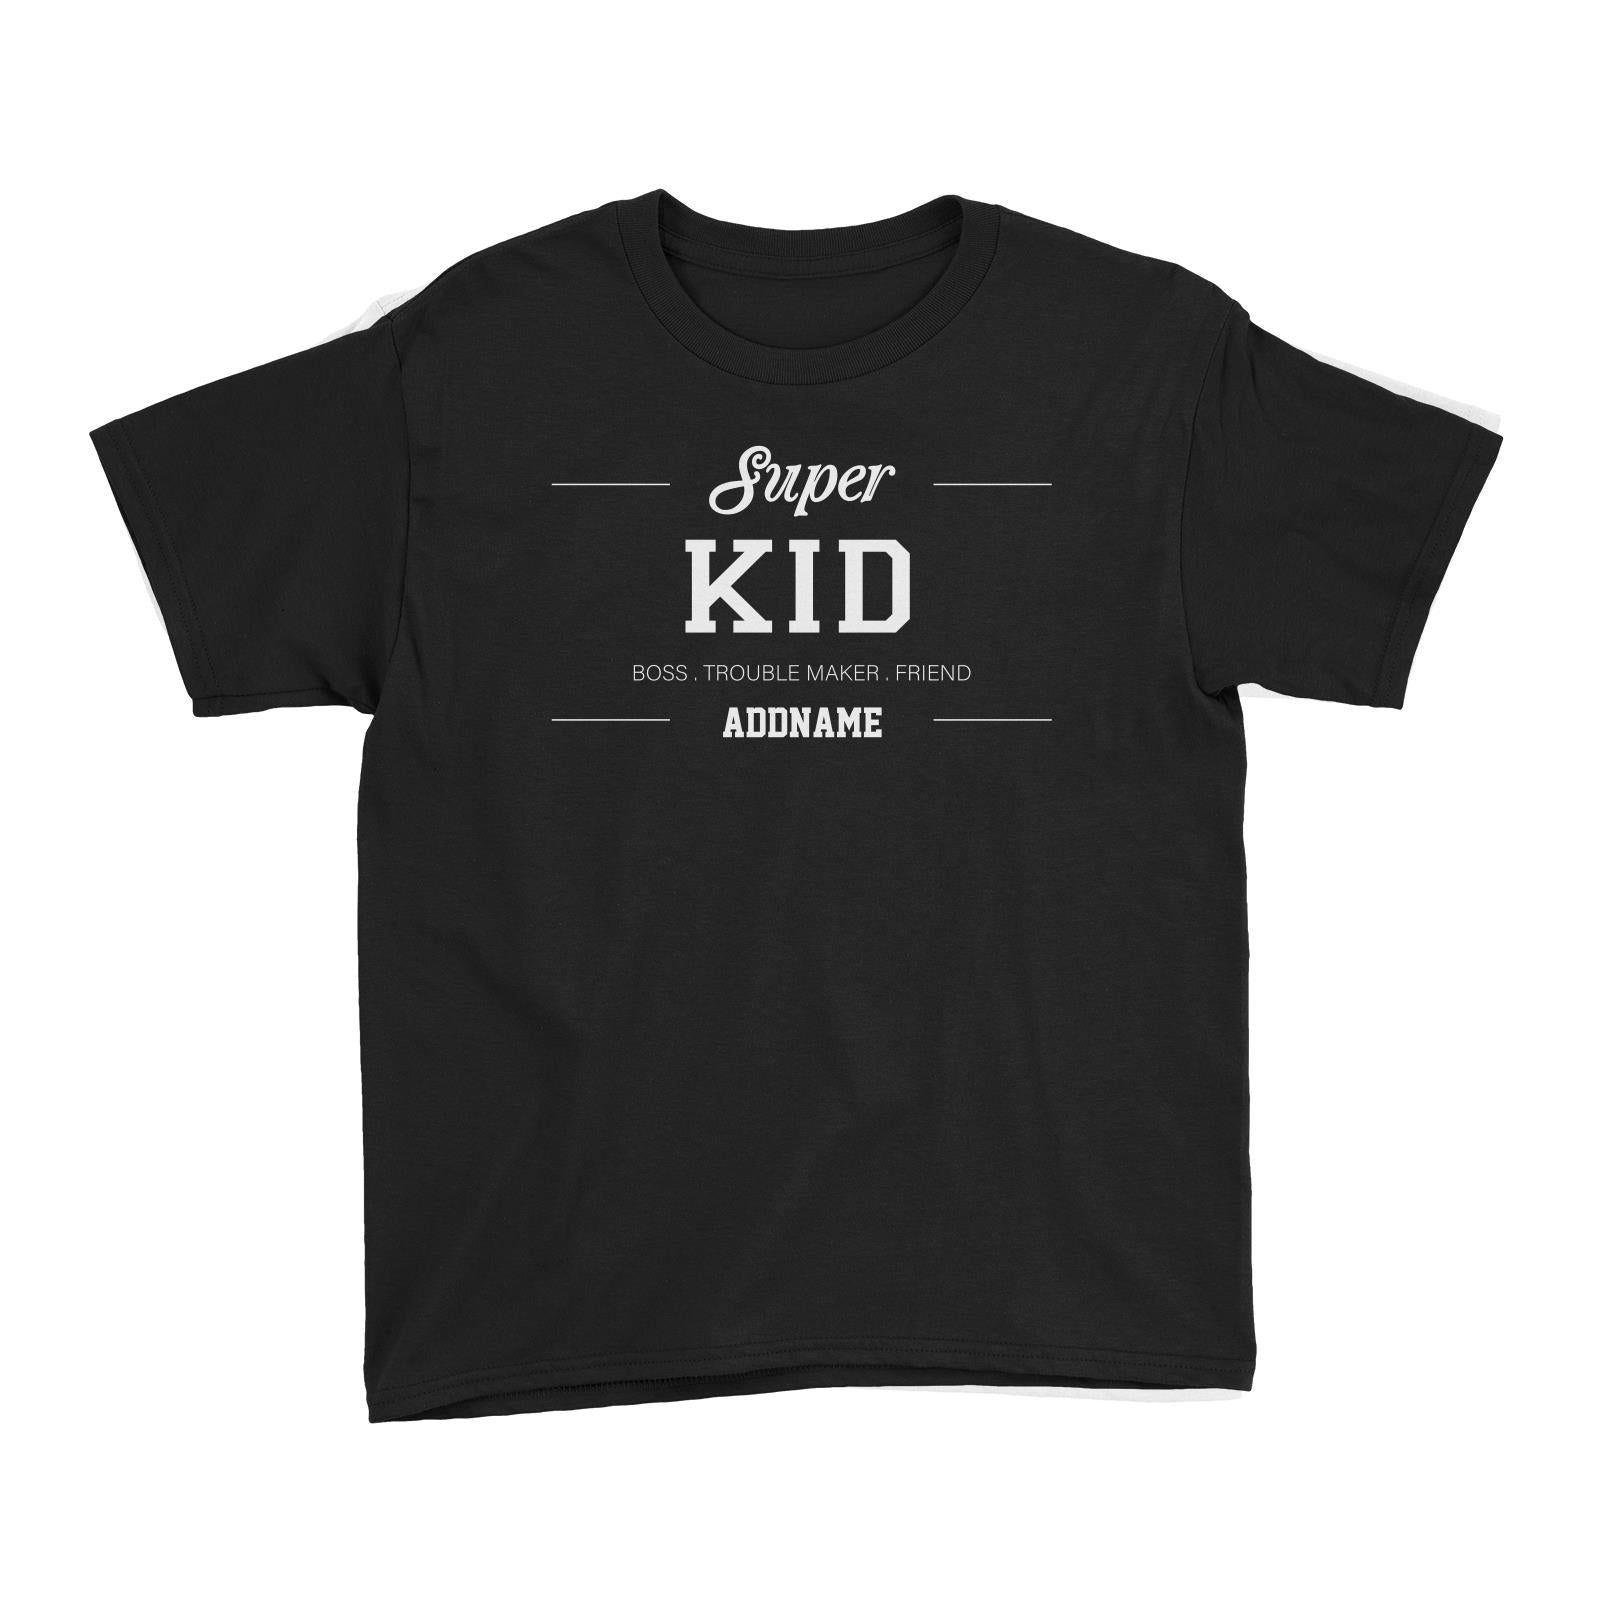 Super Definition Family Super Kid Addname Kid's T-Shirt